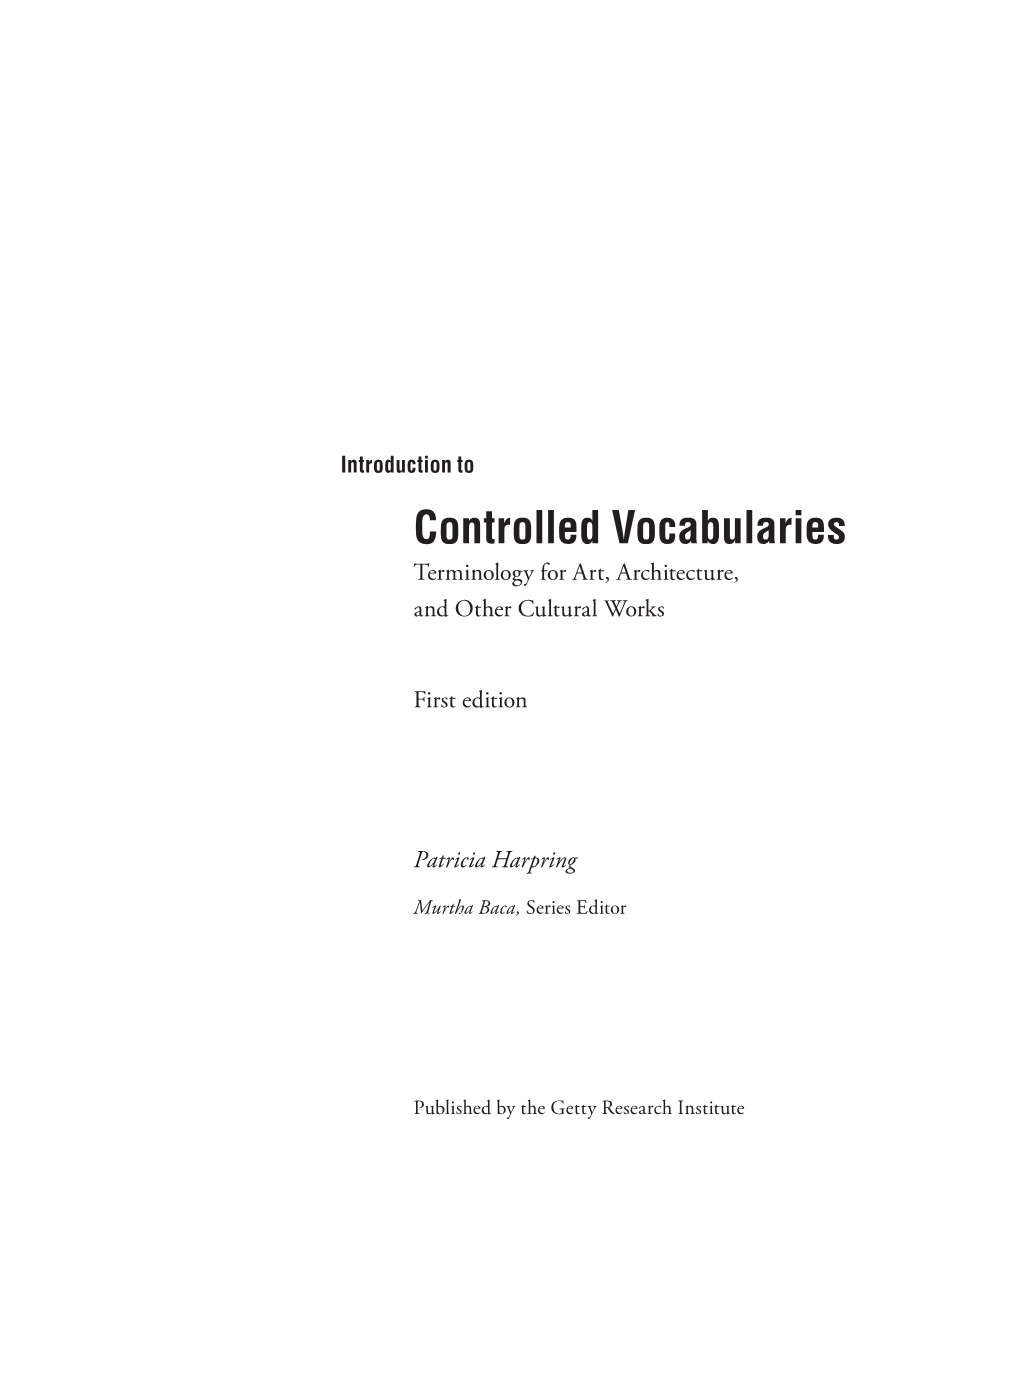 Controlled Vocabularies Terminology for Art, Architecture, and Other Cultural Works